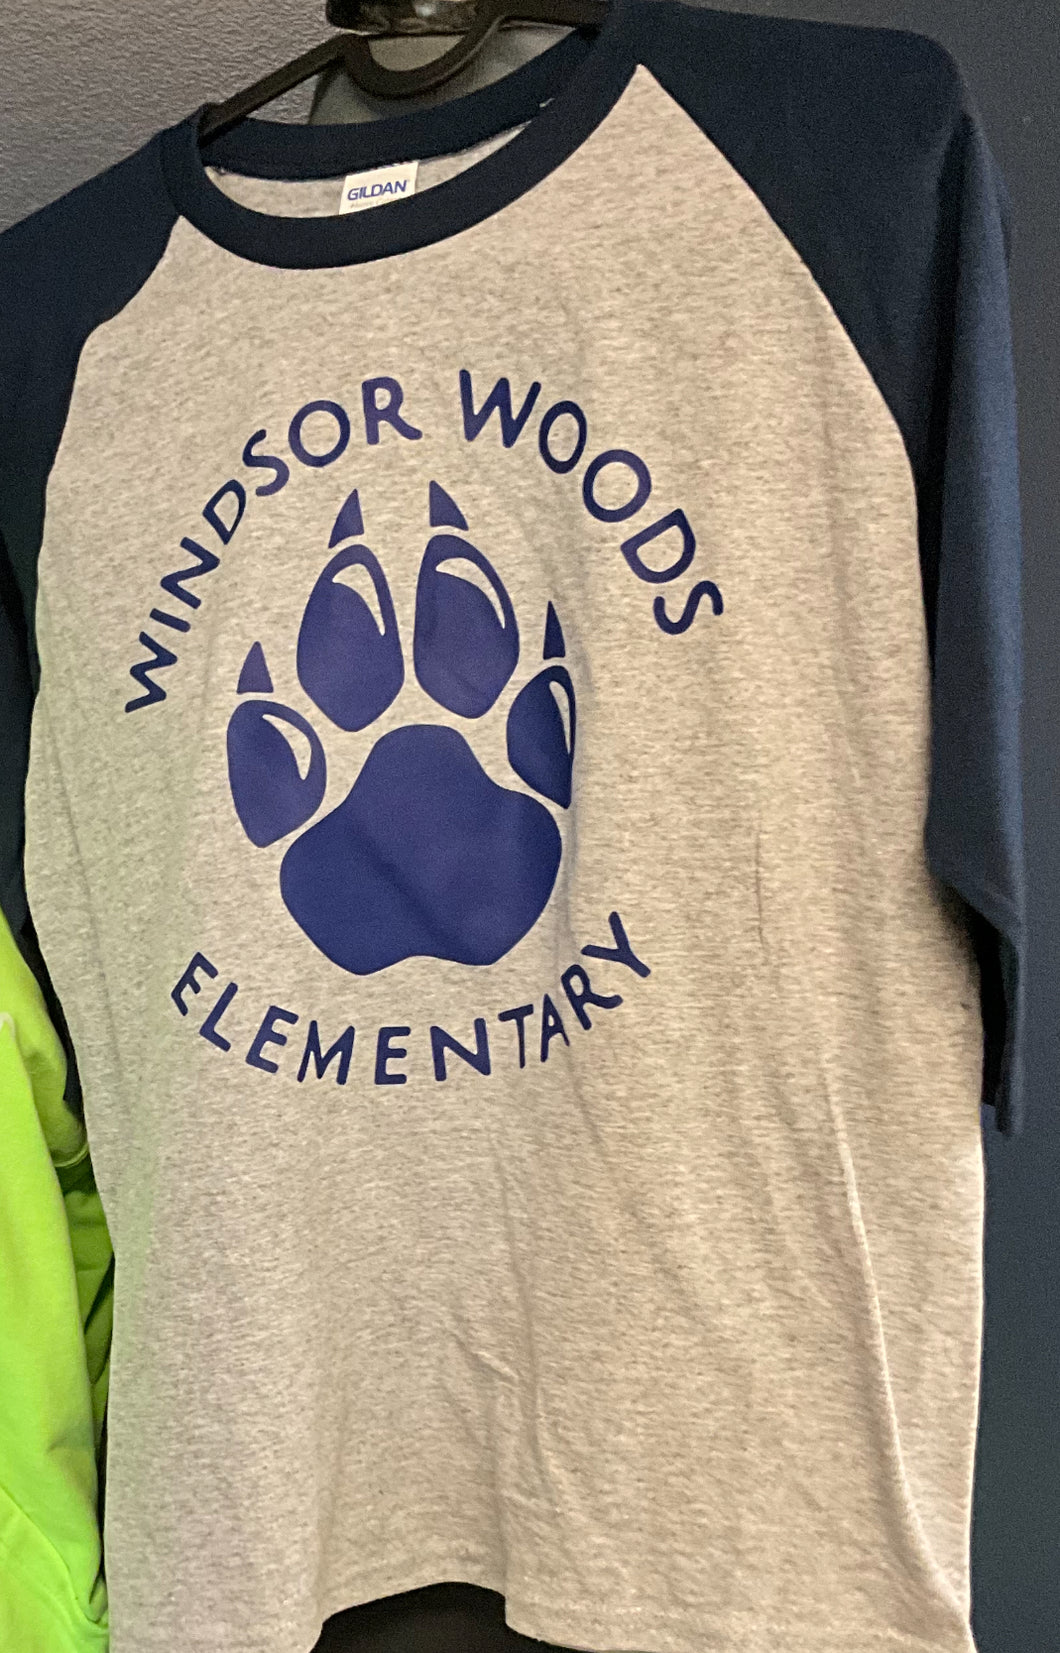 Windsor Woods Elementary School/3/4 Sleeve Shirt/grey with Blue